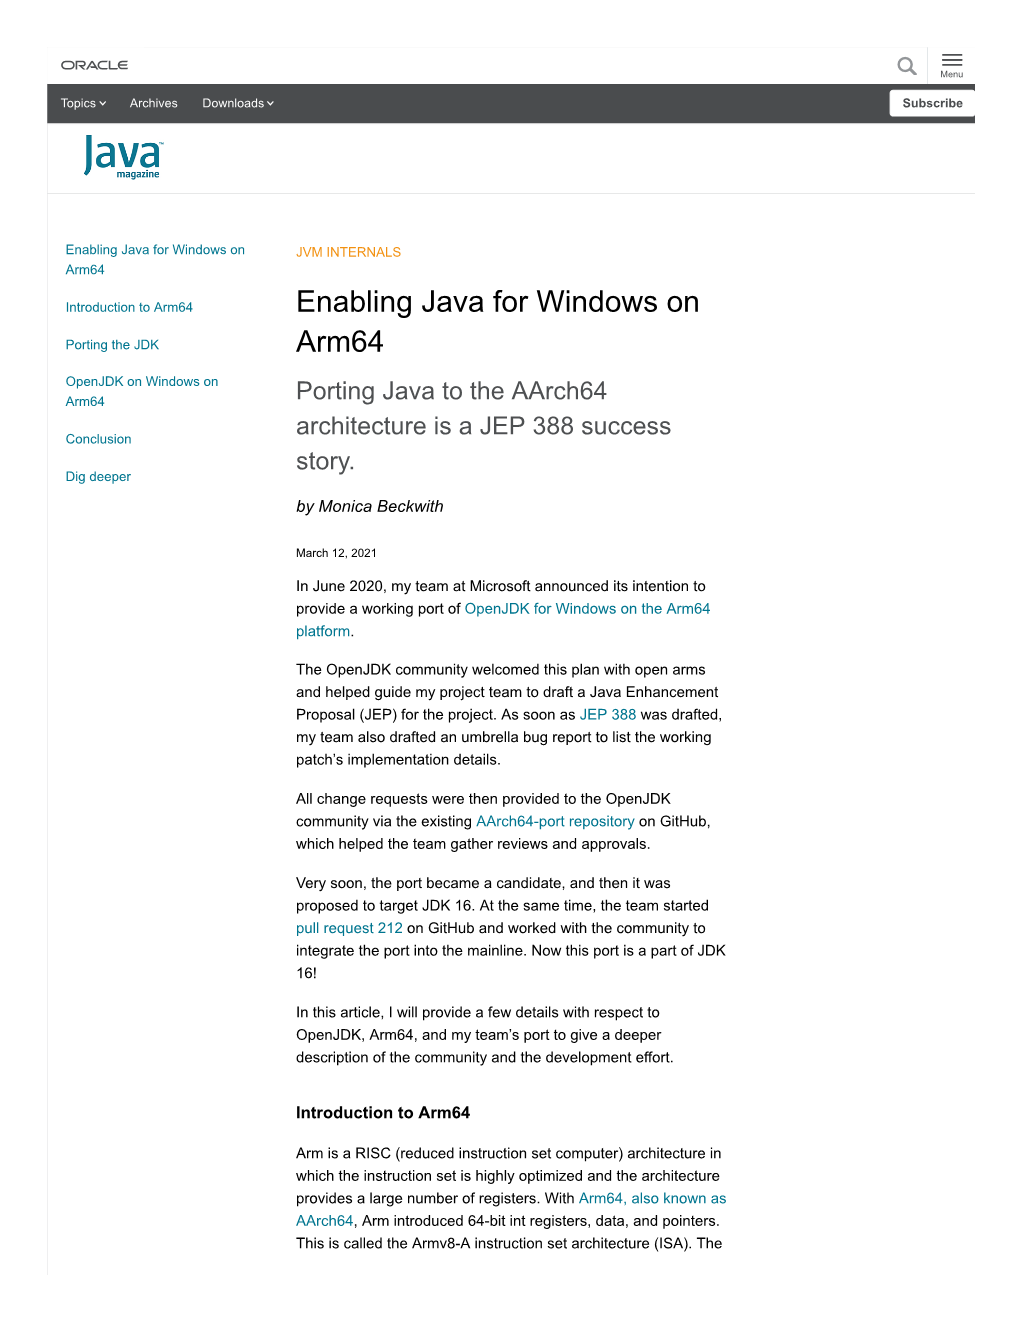 Enabling Java for Windows on Arm64